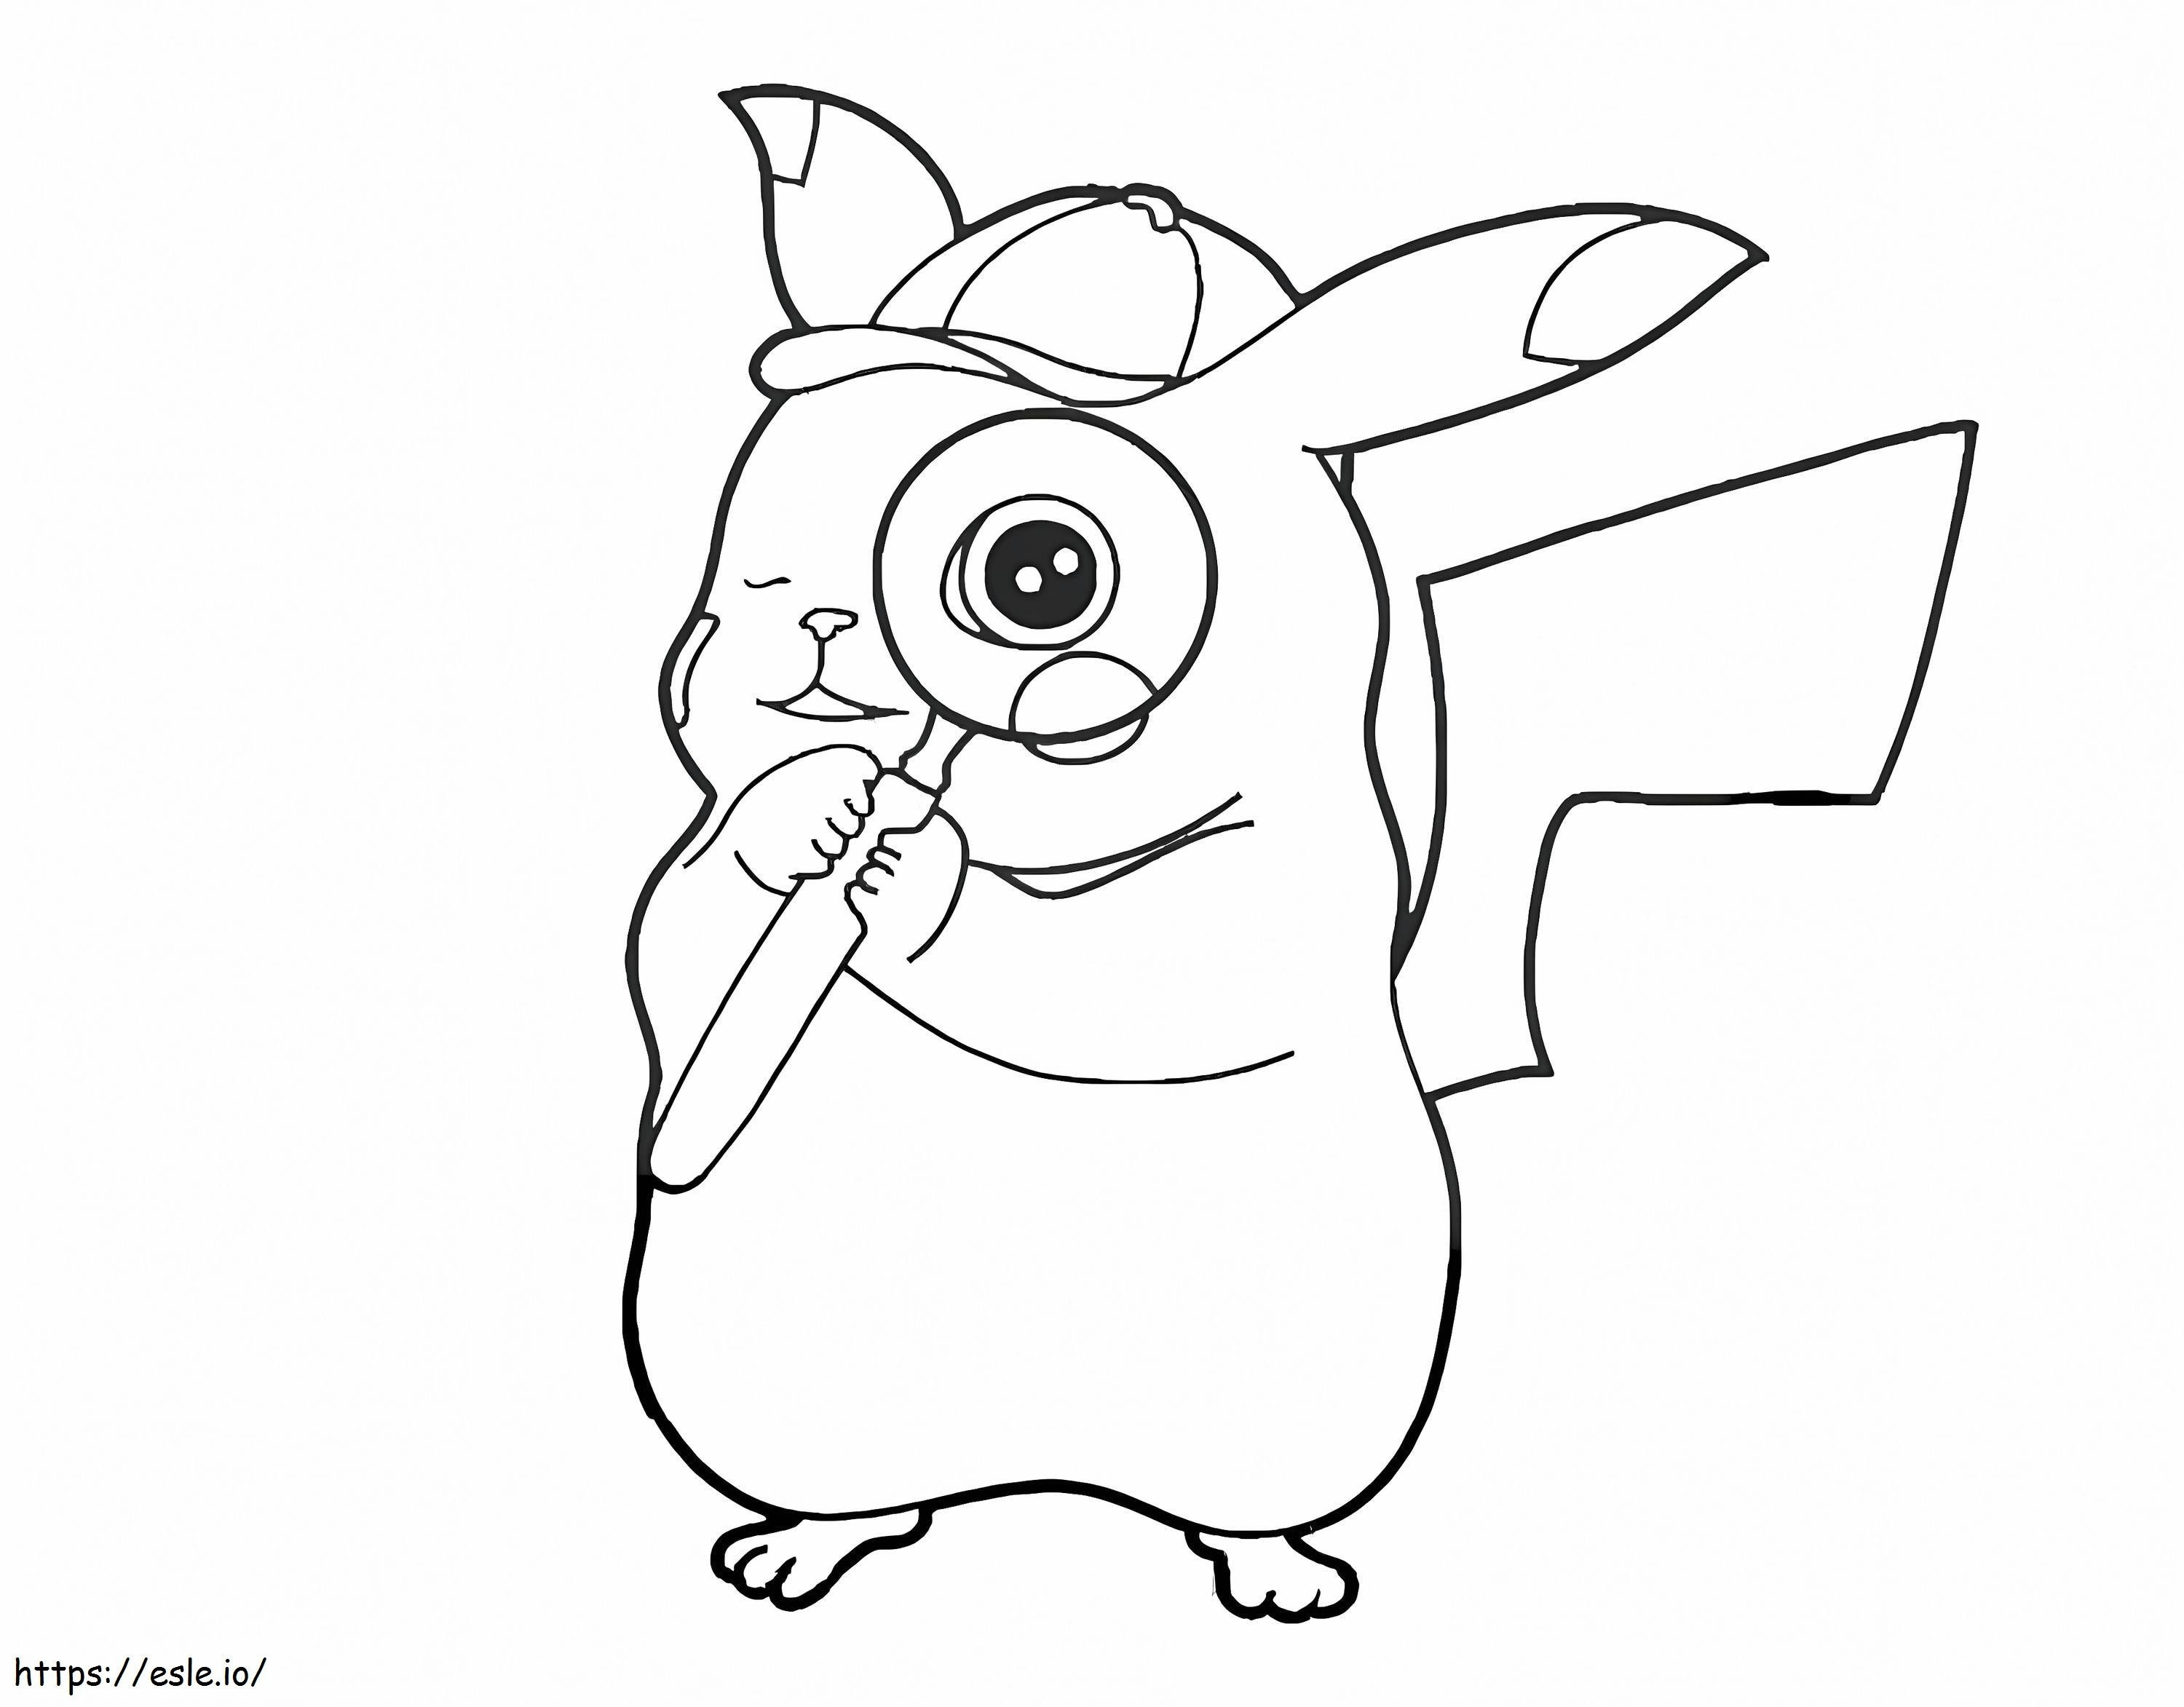 Detektiv Pikachu ausmalbilder